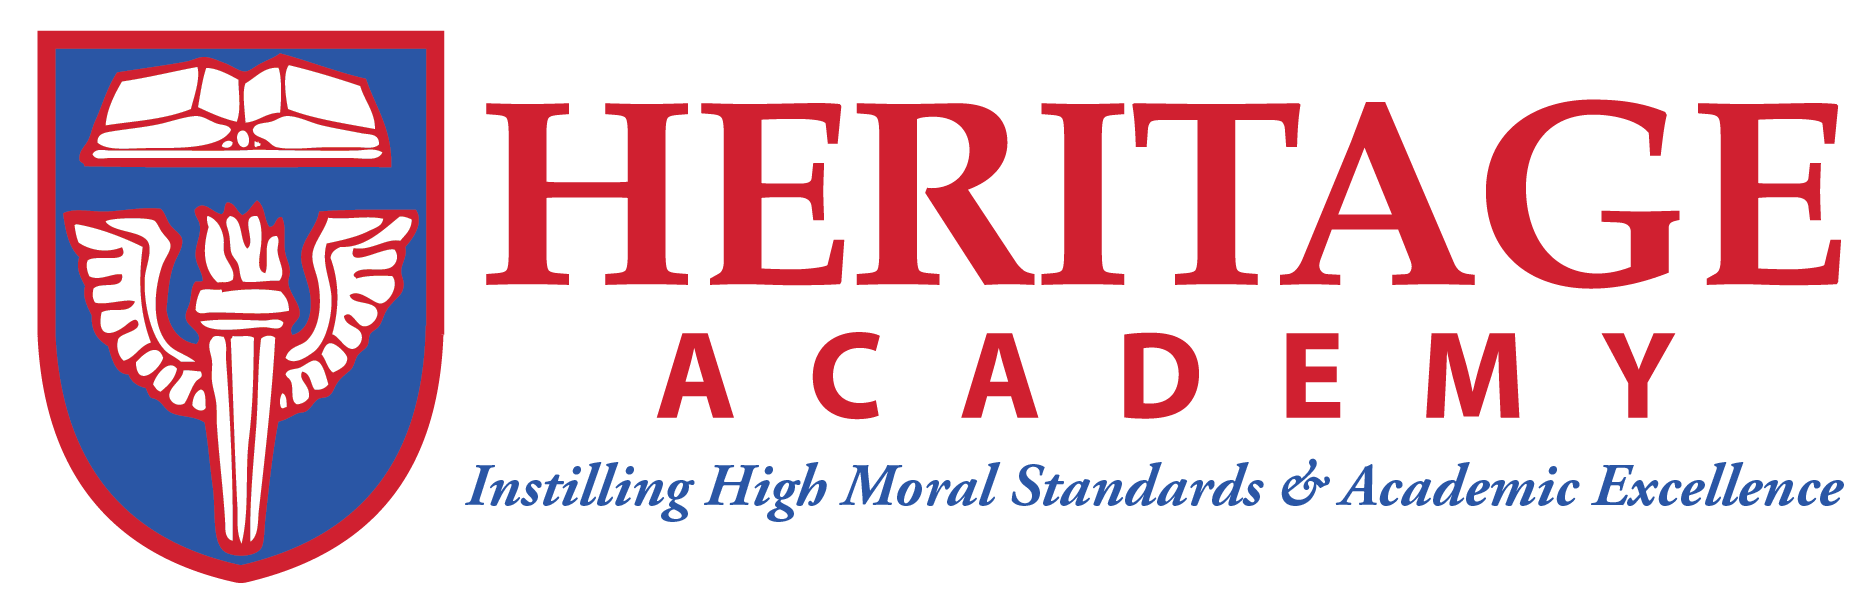 Heritage Academy - Instilling High Moral Standards & Academic Excellence